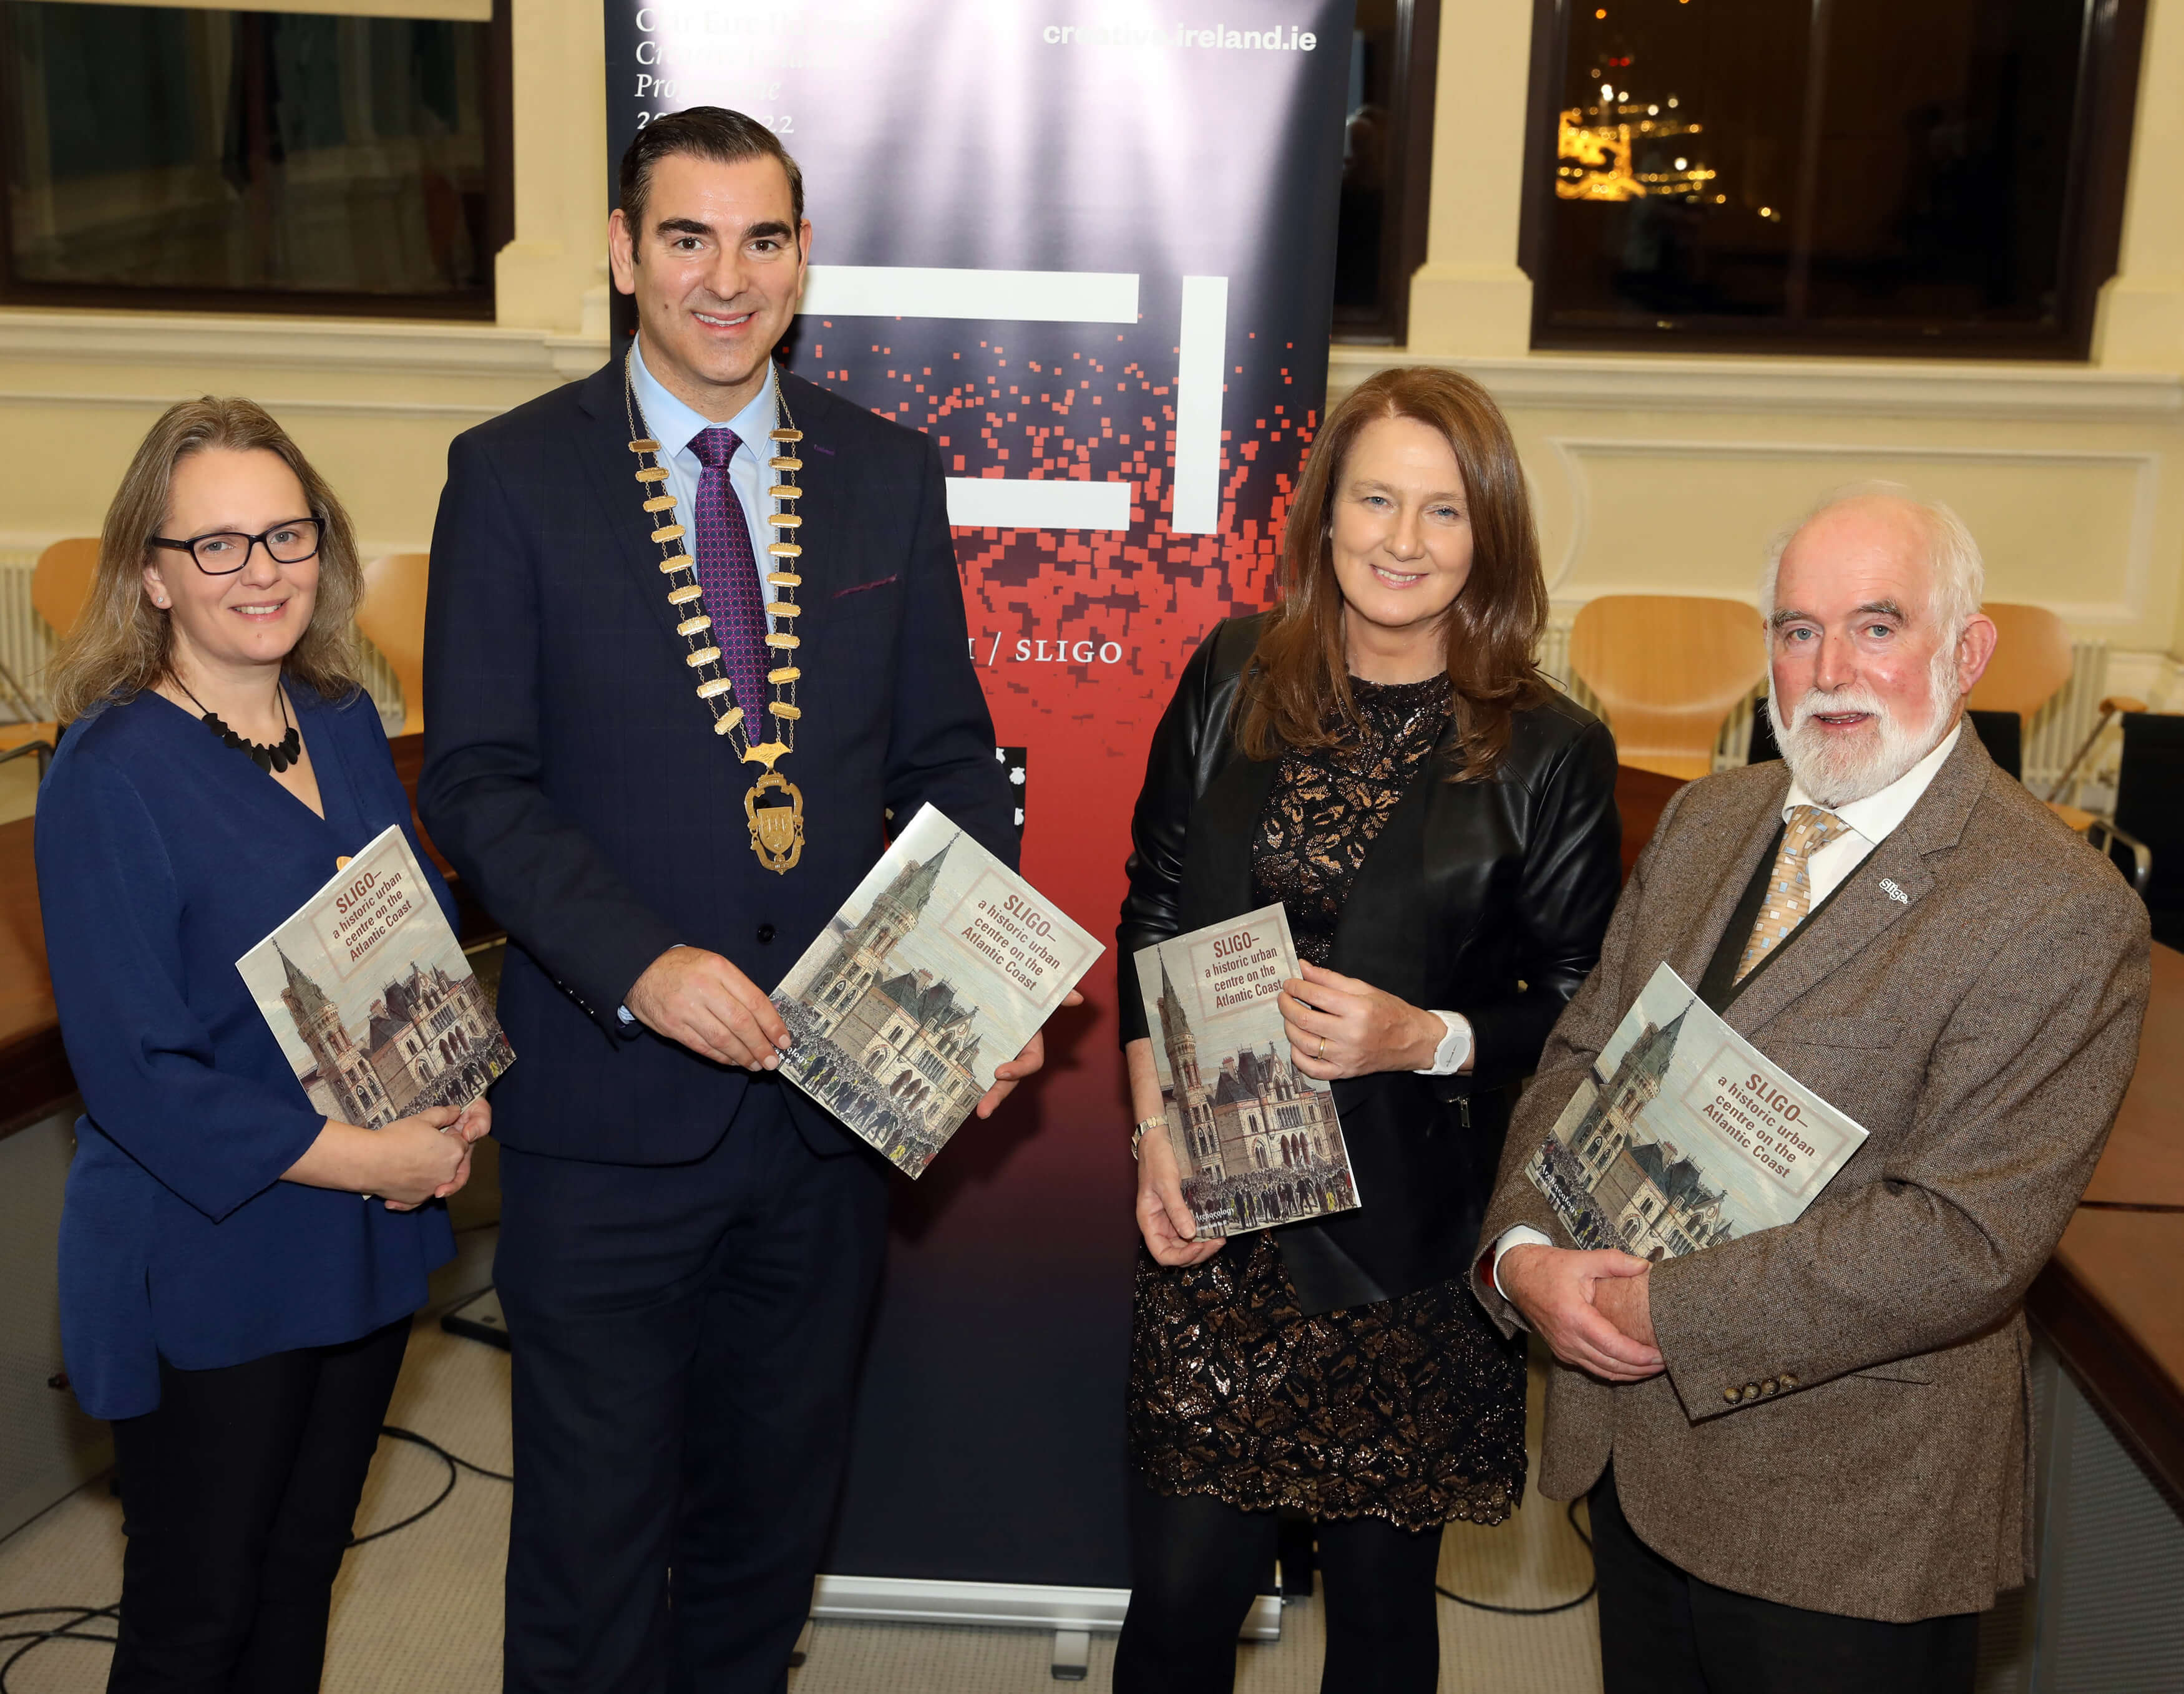 Cathaoirleach Launches New Heritage Guide for Sligo